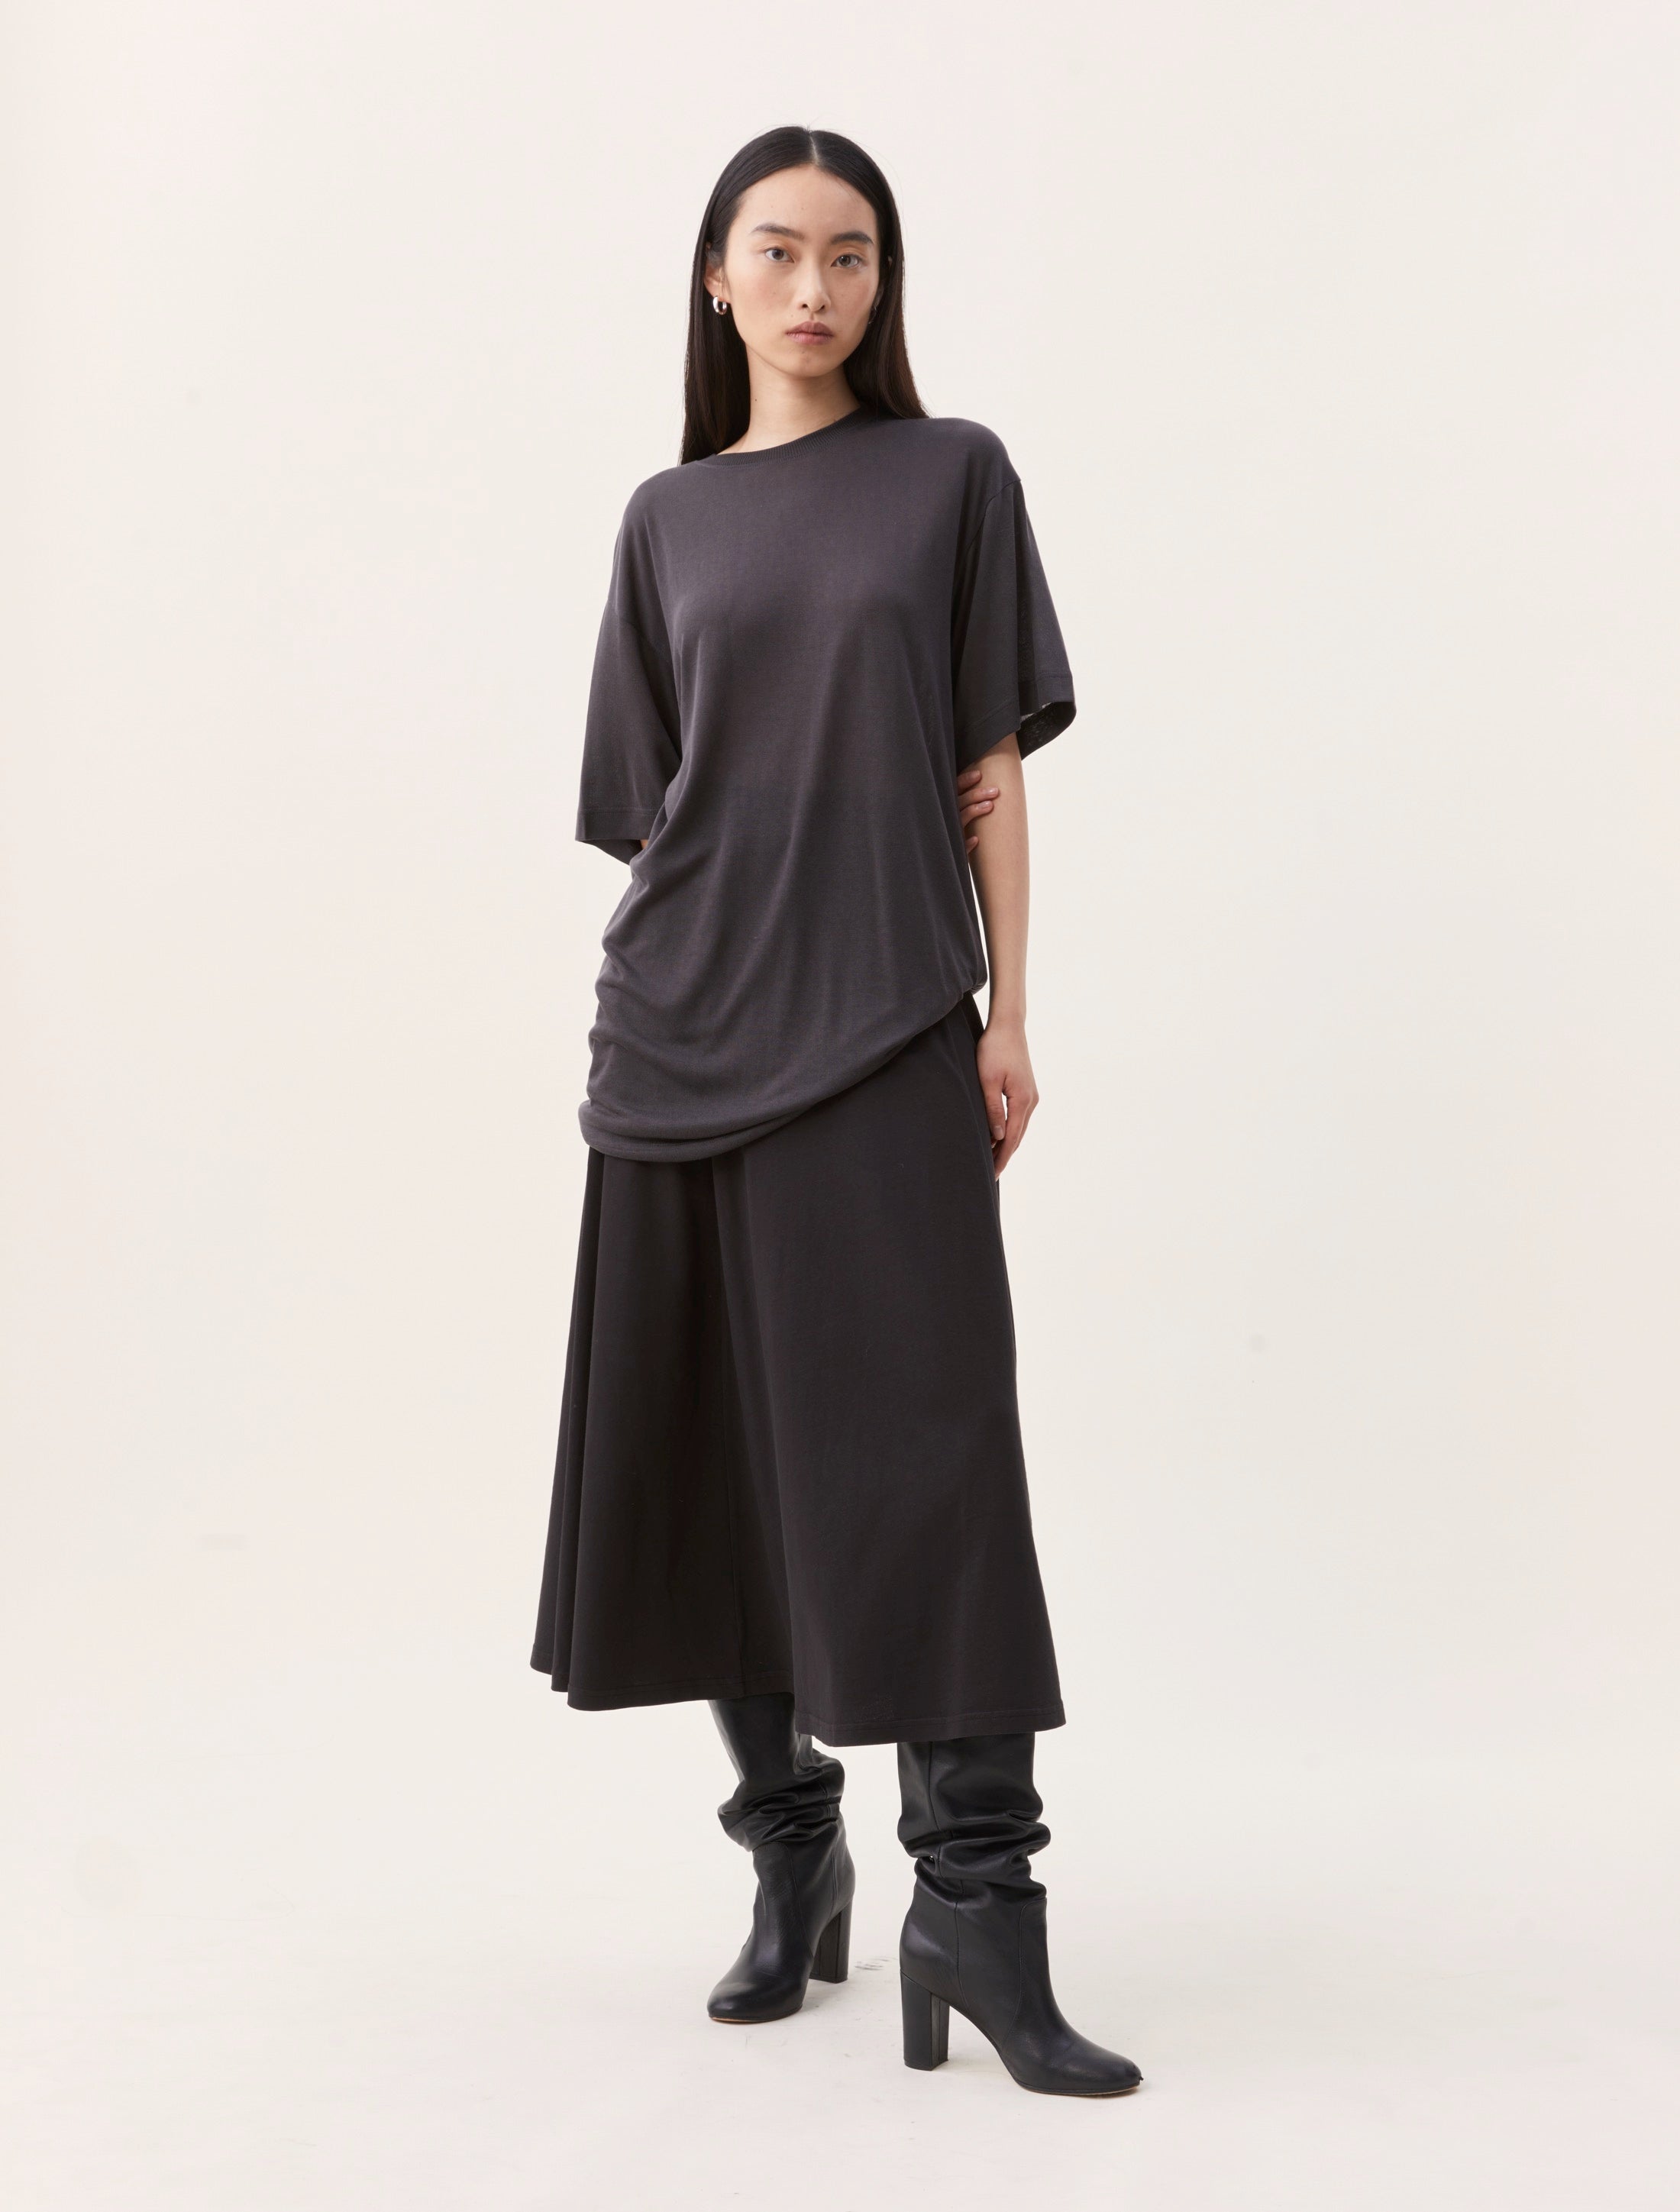 Ninety Percent Yuzu T-Shirt in Licorice